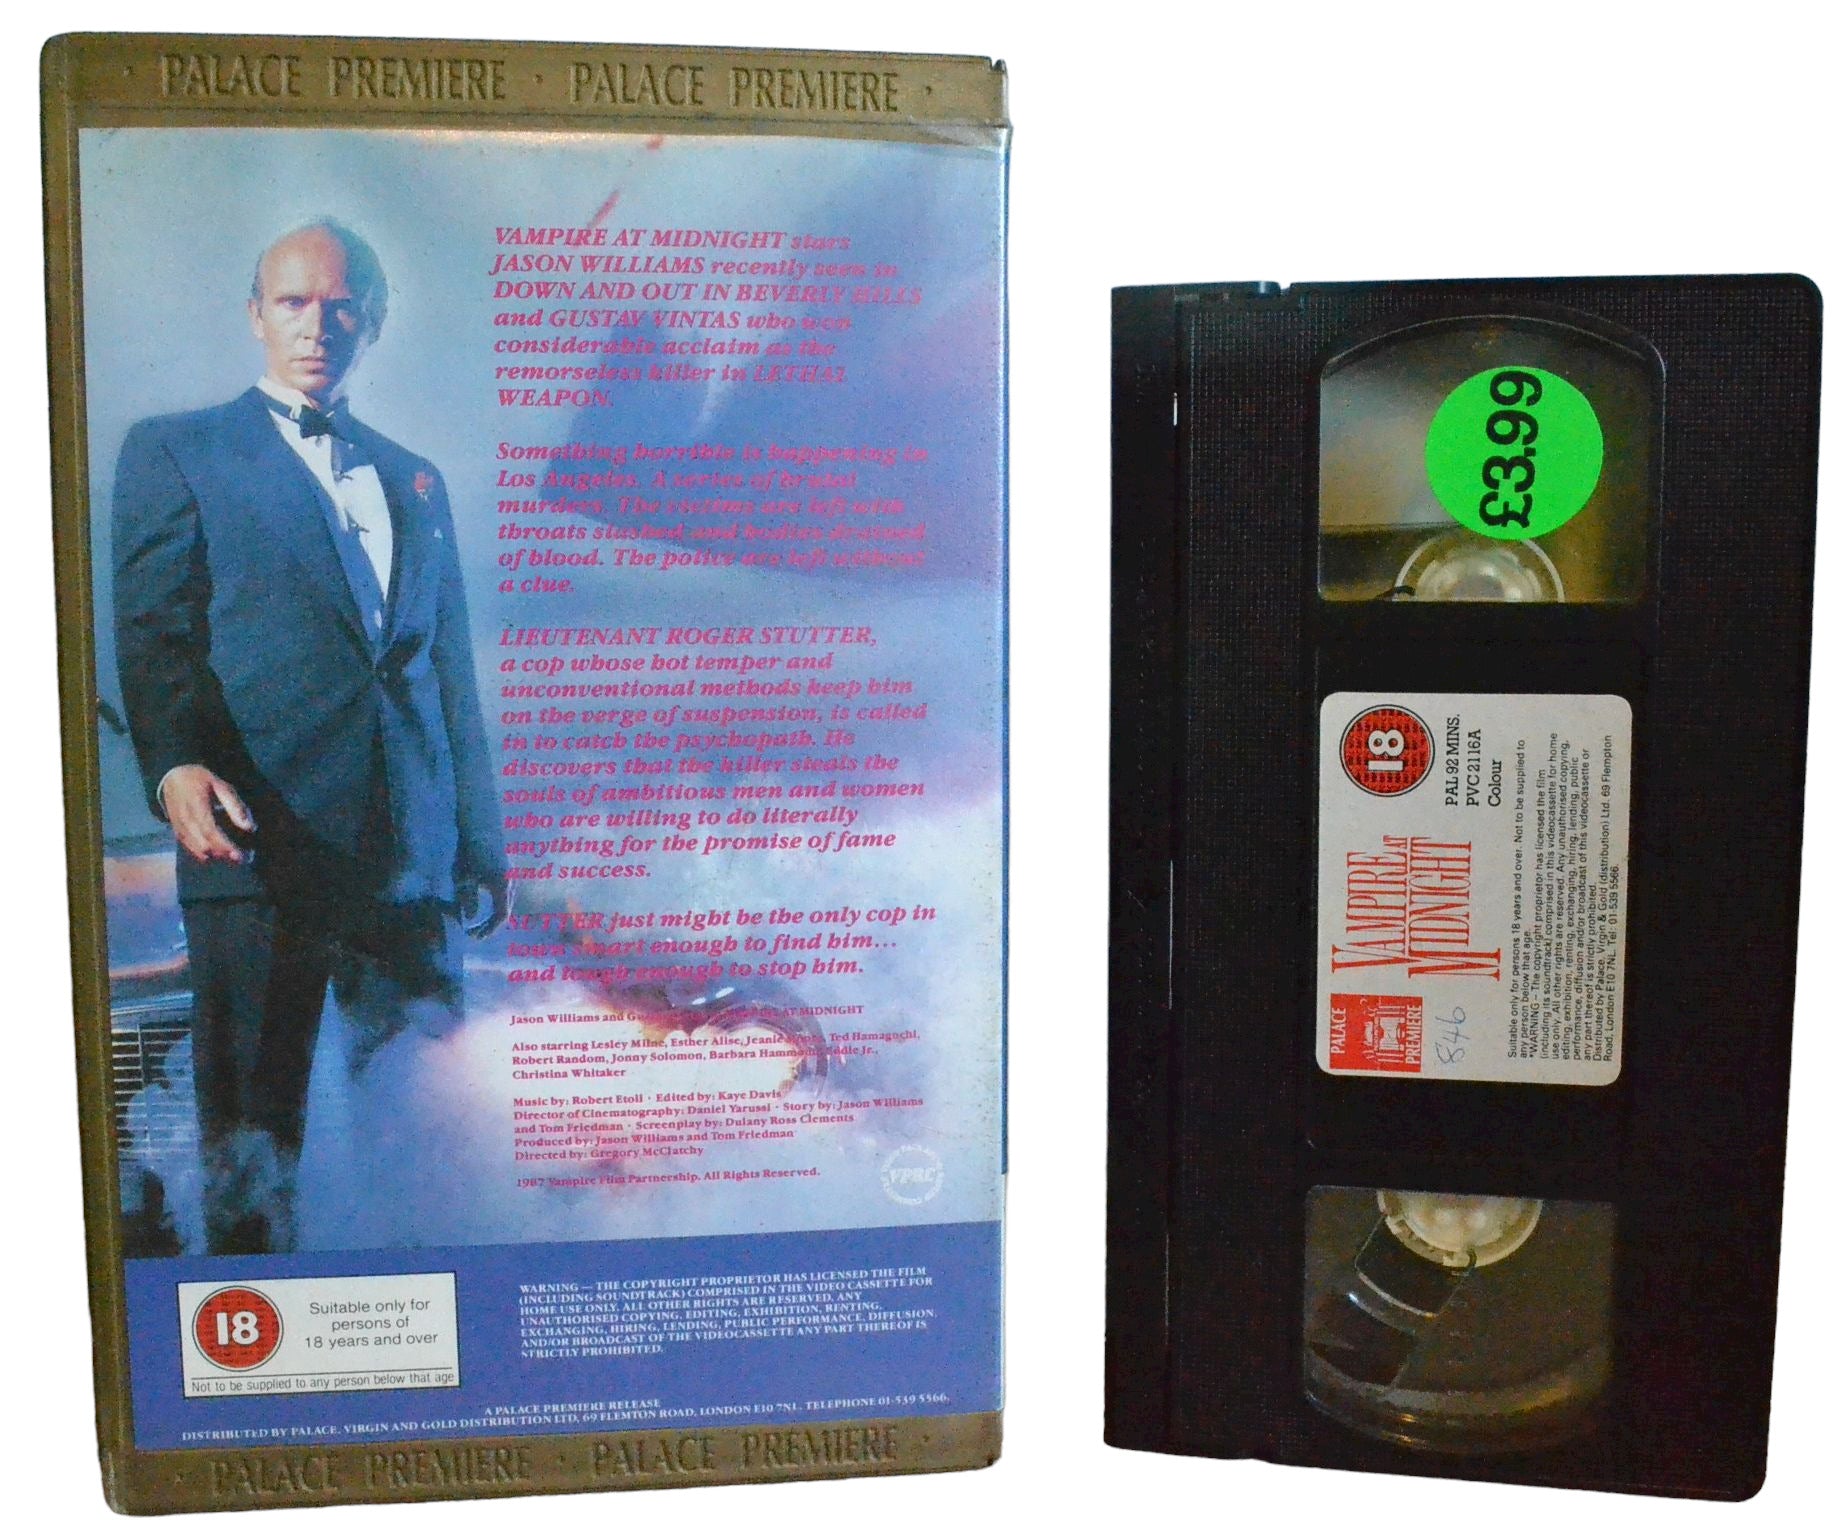 Vampire At Midnight - Jason Williams - Palace Premiere - Large Box - PAL - VHS-